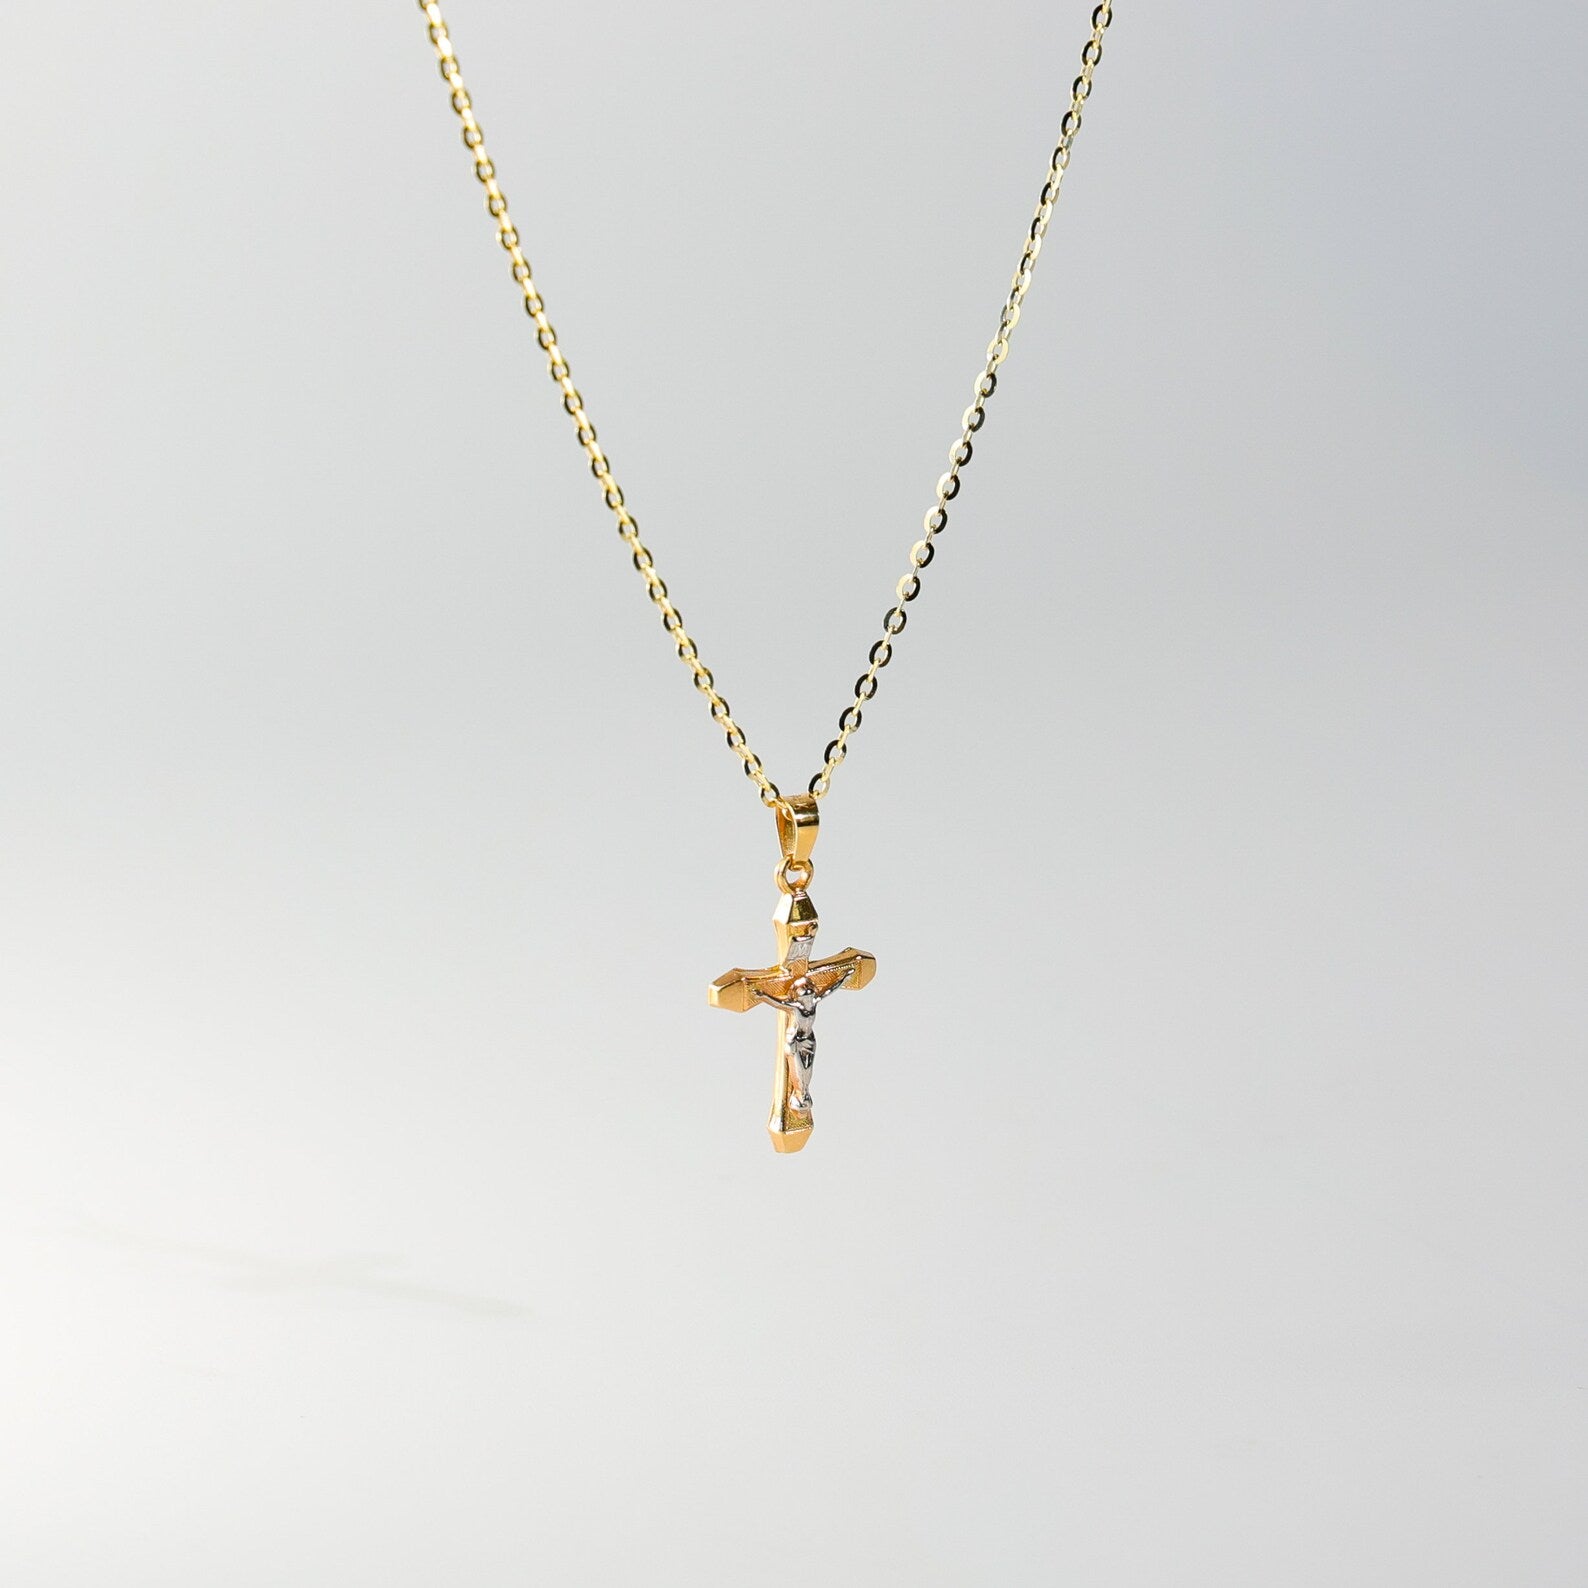 Gold Crucifix Cross Pendant Model-0875 - Charlie & Co. Jewelry